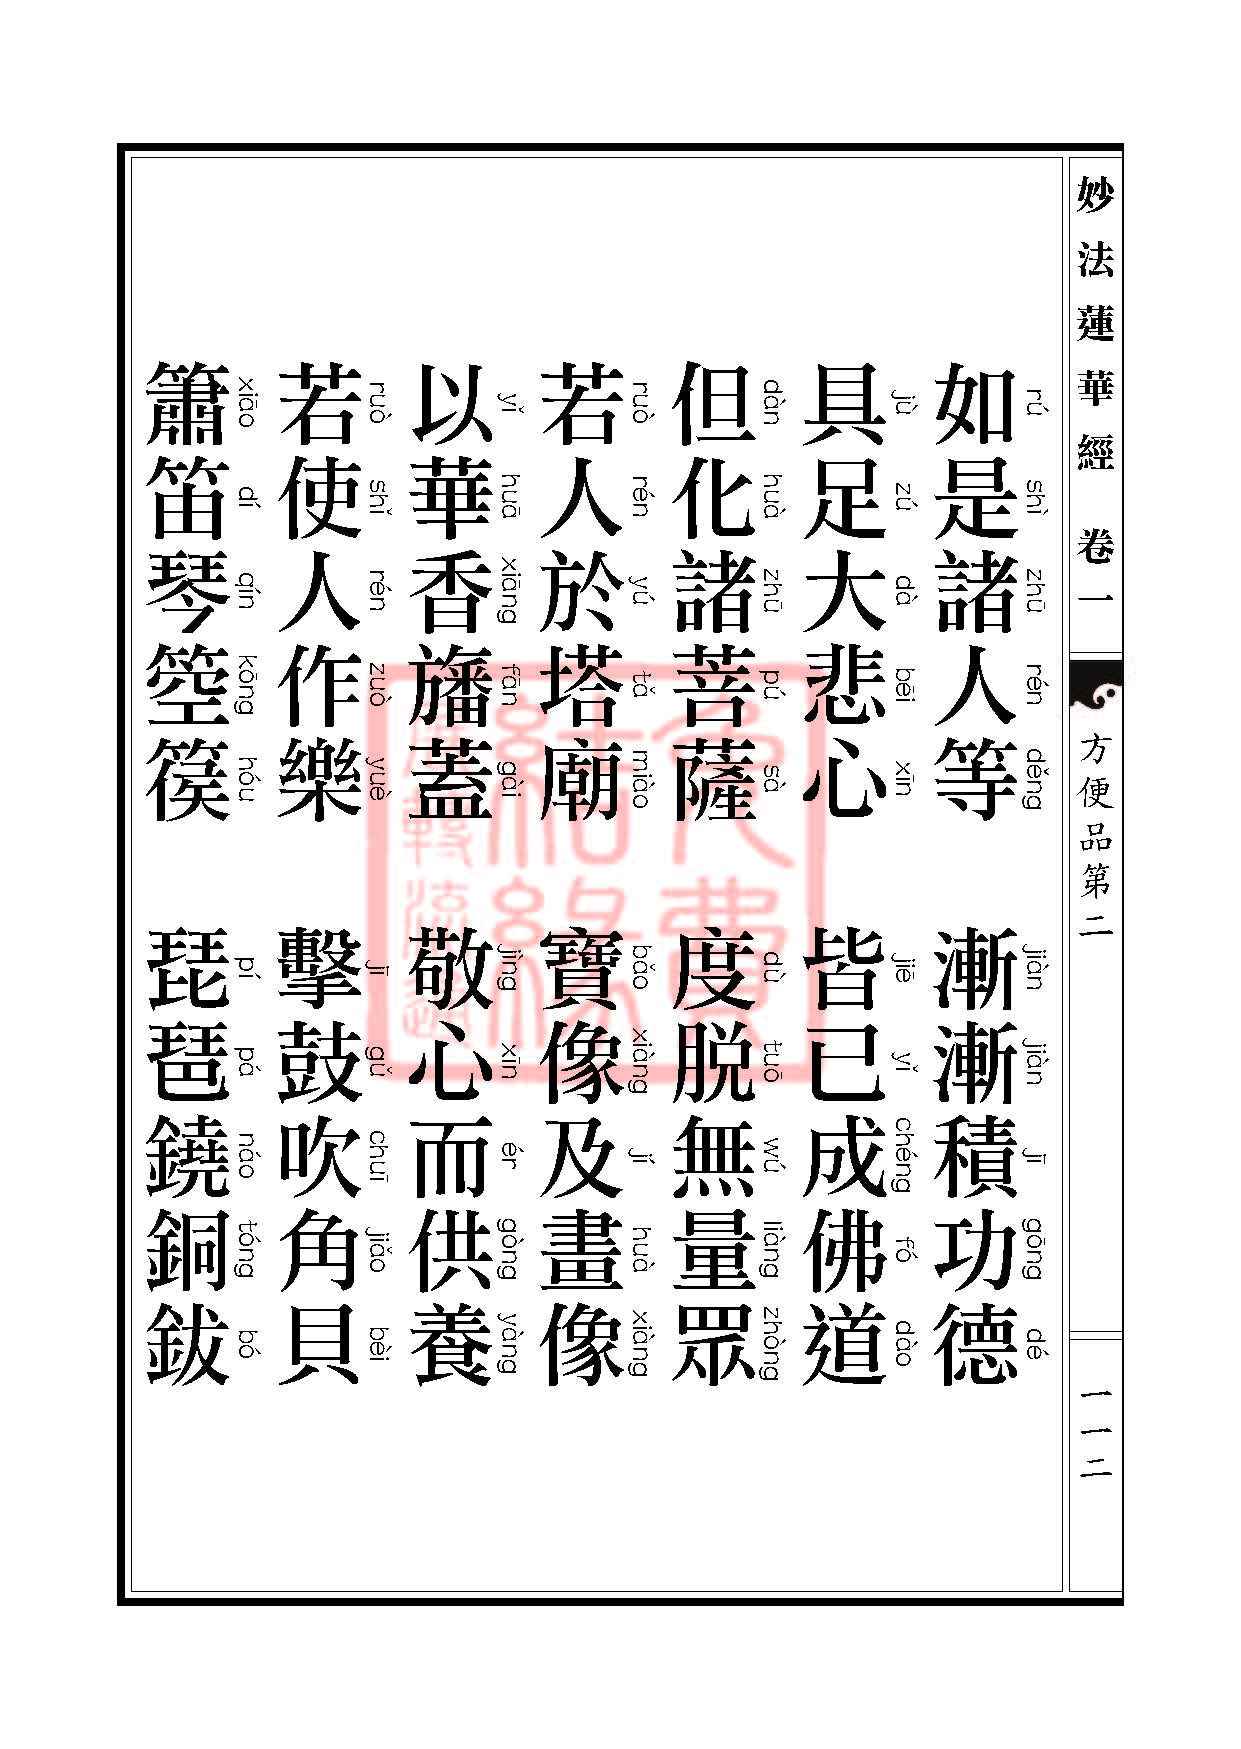 Book_FHJ_HK-A6-PY_Web_ҳ_112.jpg